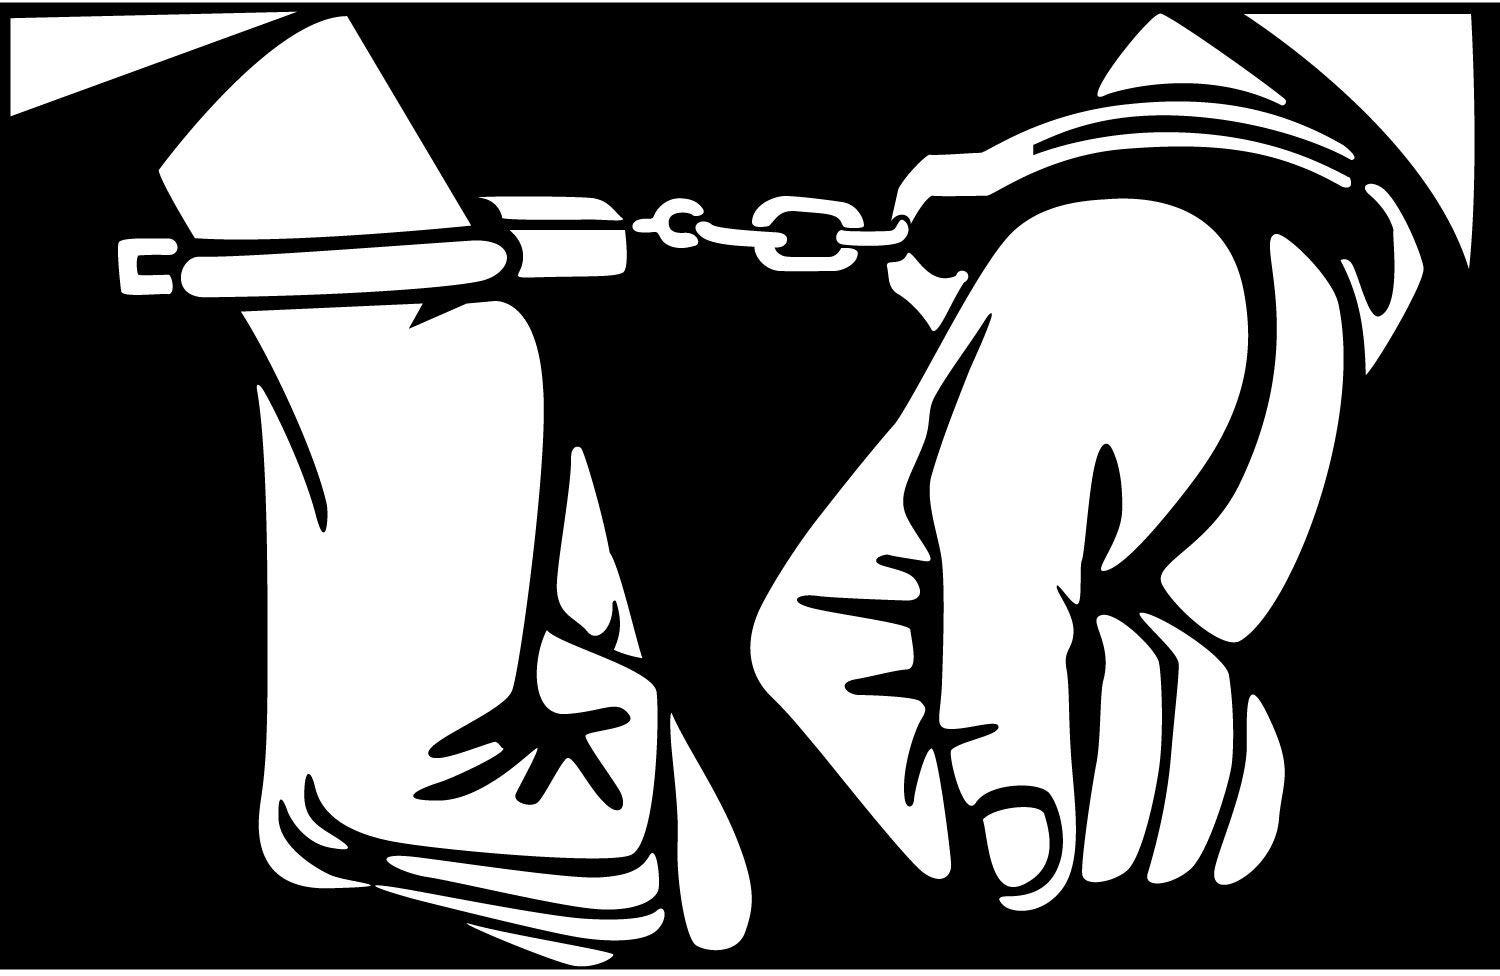 handcuffed_hands.jpg